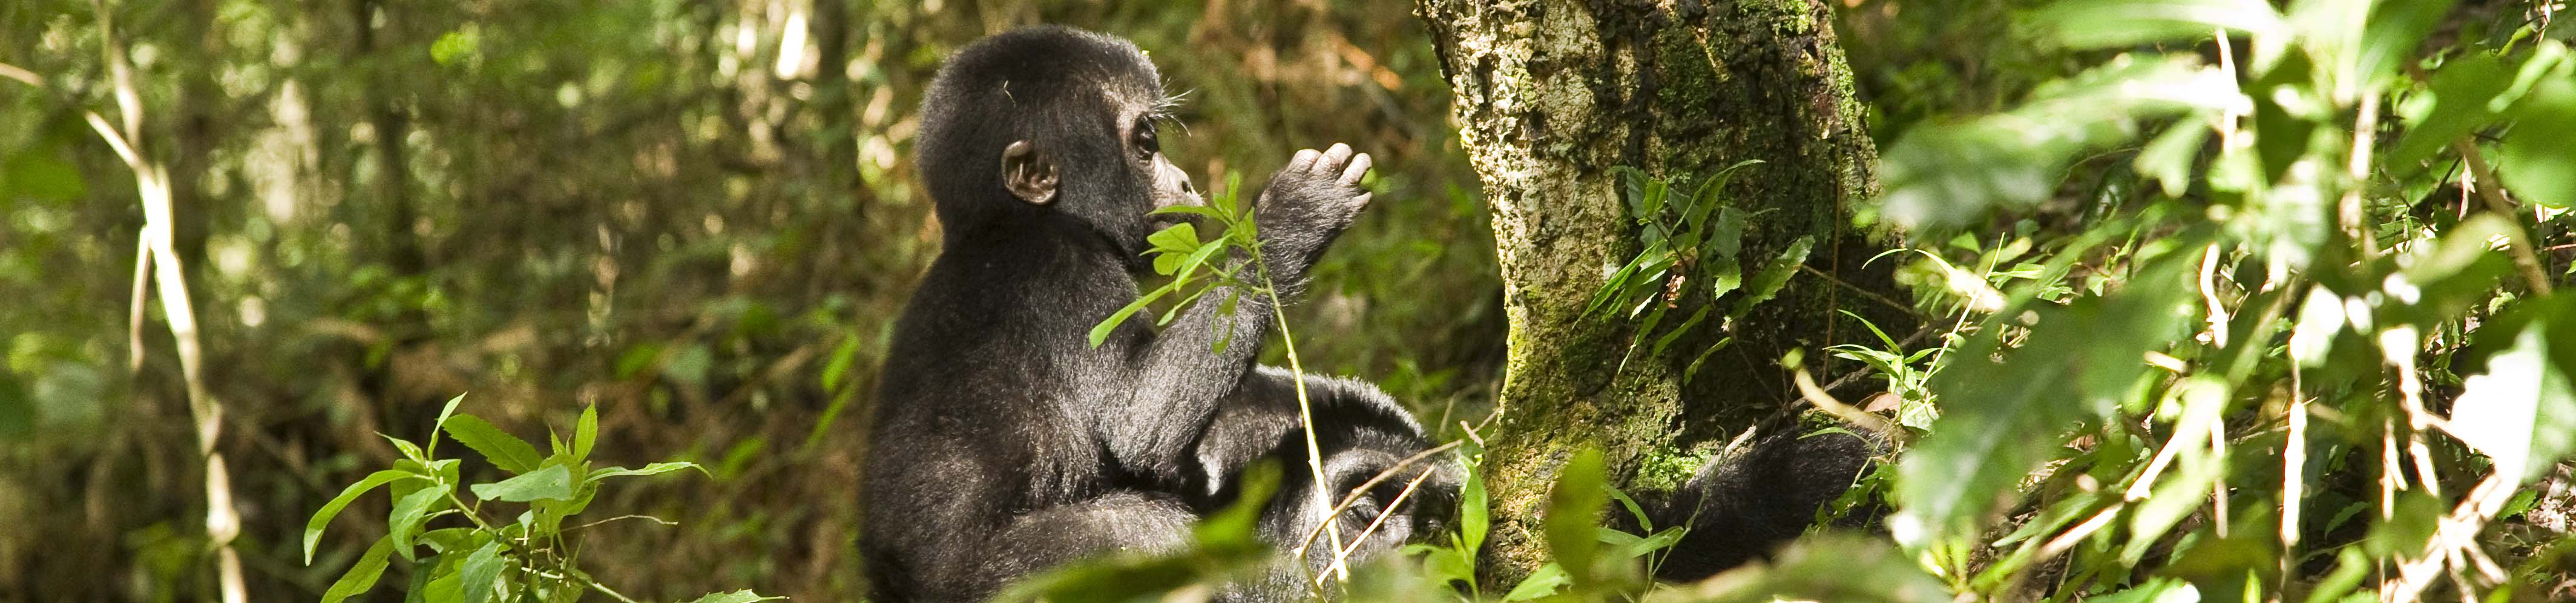 Baby gorilla in Bwindi Impenetrable